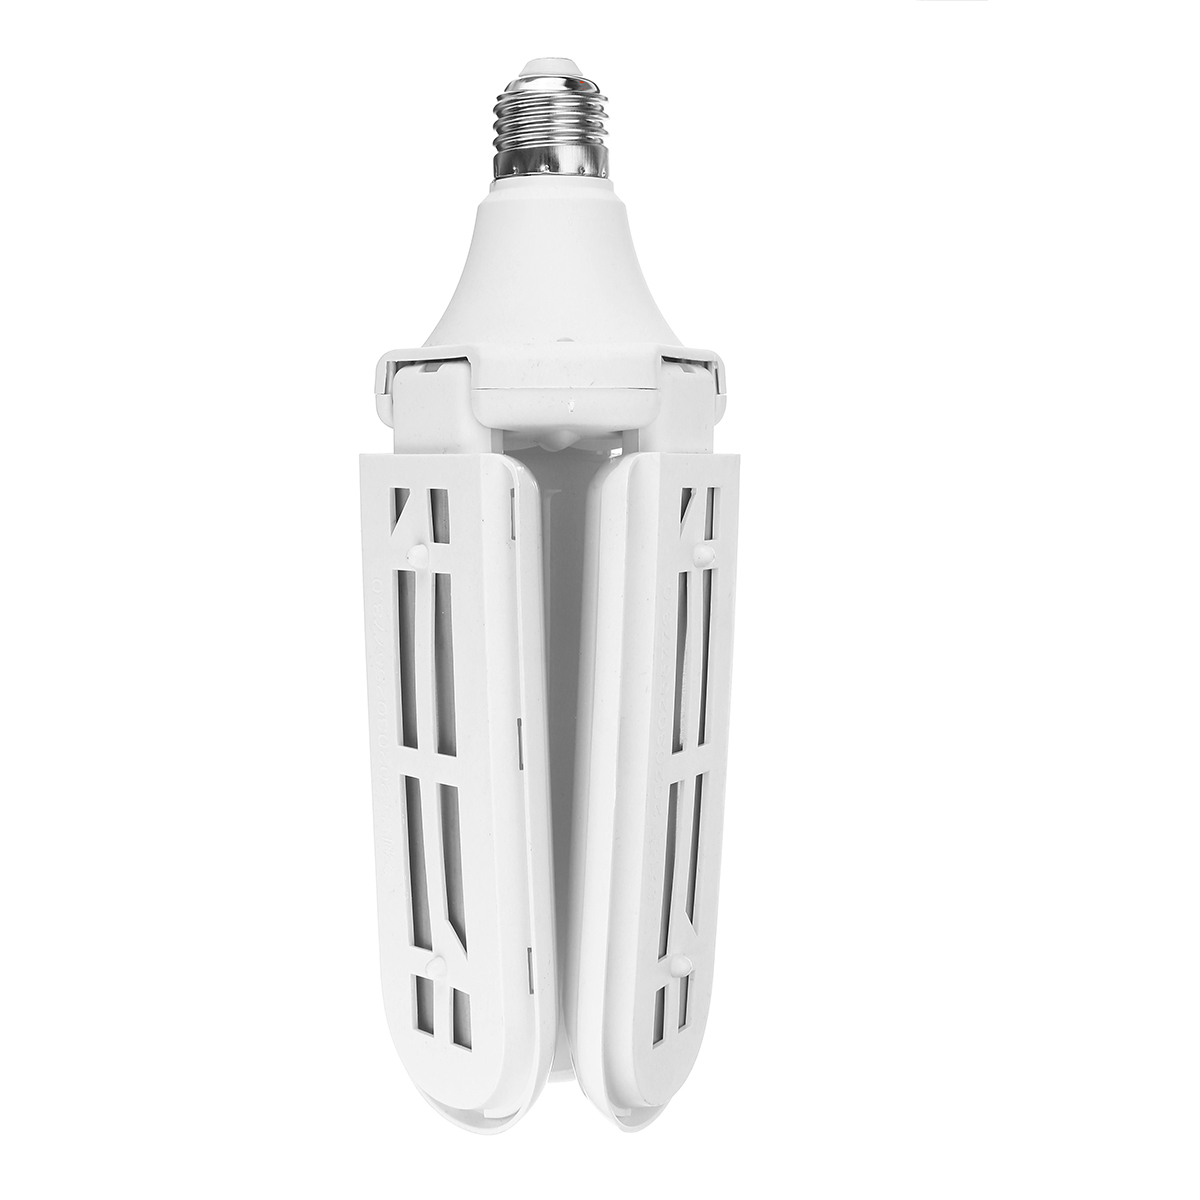 AC165-265V-45W-E27-3-Blade-LED-Garage-Light-Deformable-Ceiling-Lamp-Fixture-Workshop-Bulb-1723875-4